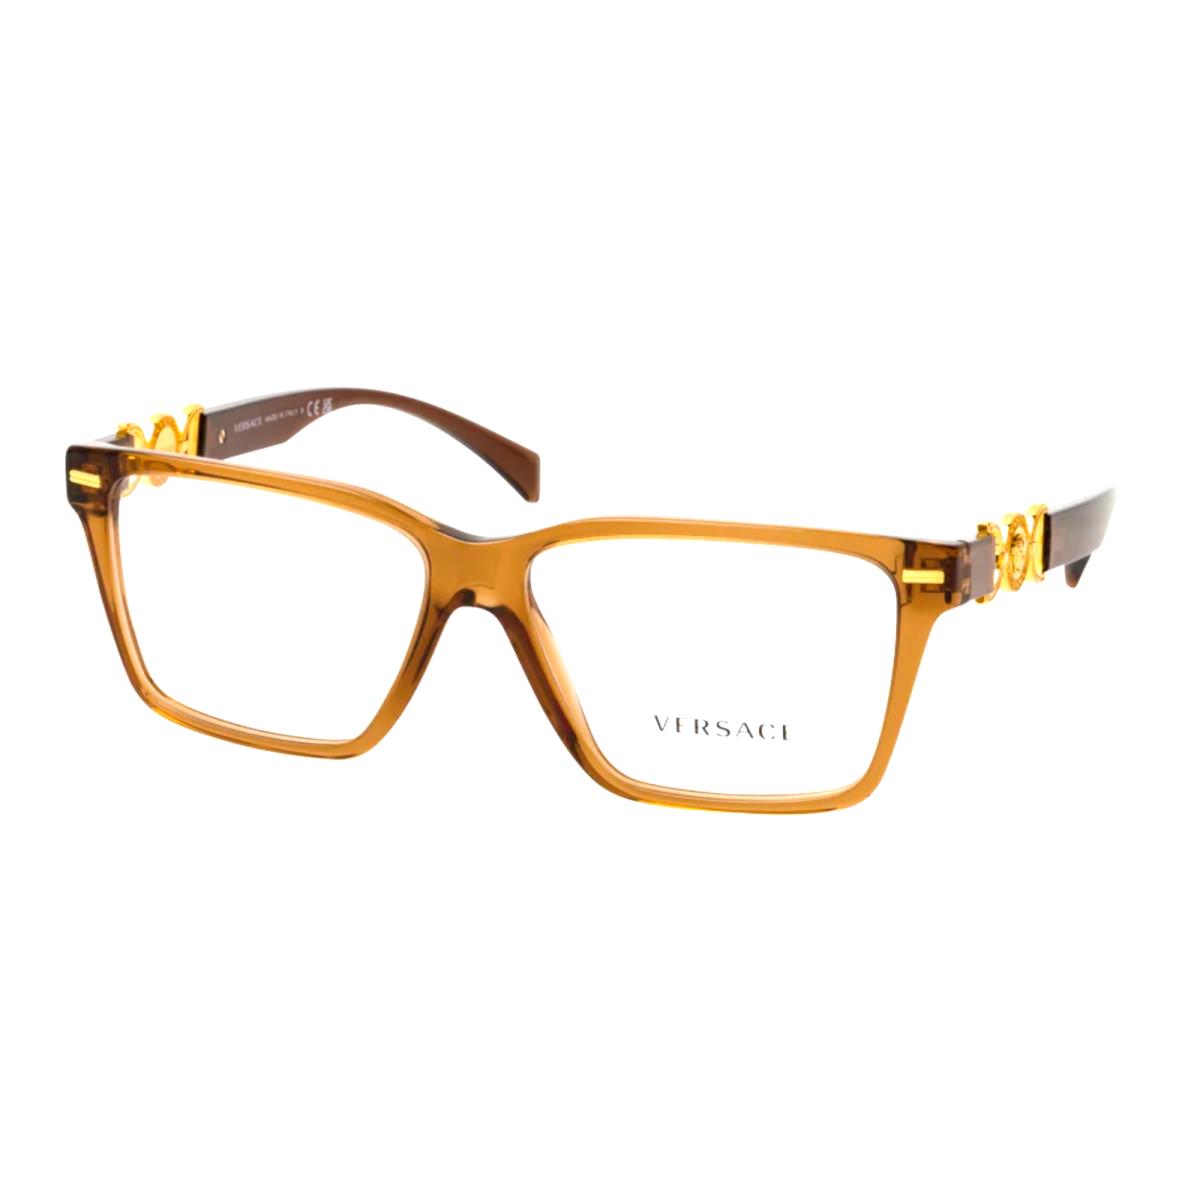 Versace Eyeglasses Mod. 3335 5028 54-14 140 Brown Gold Frames Medusa Logos